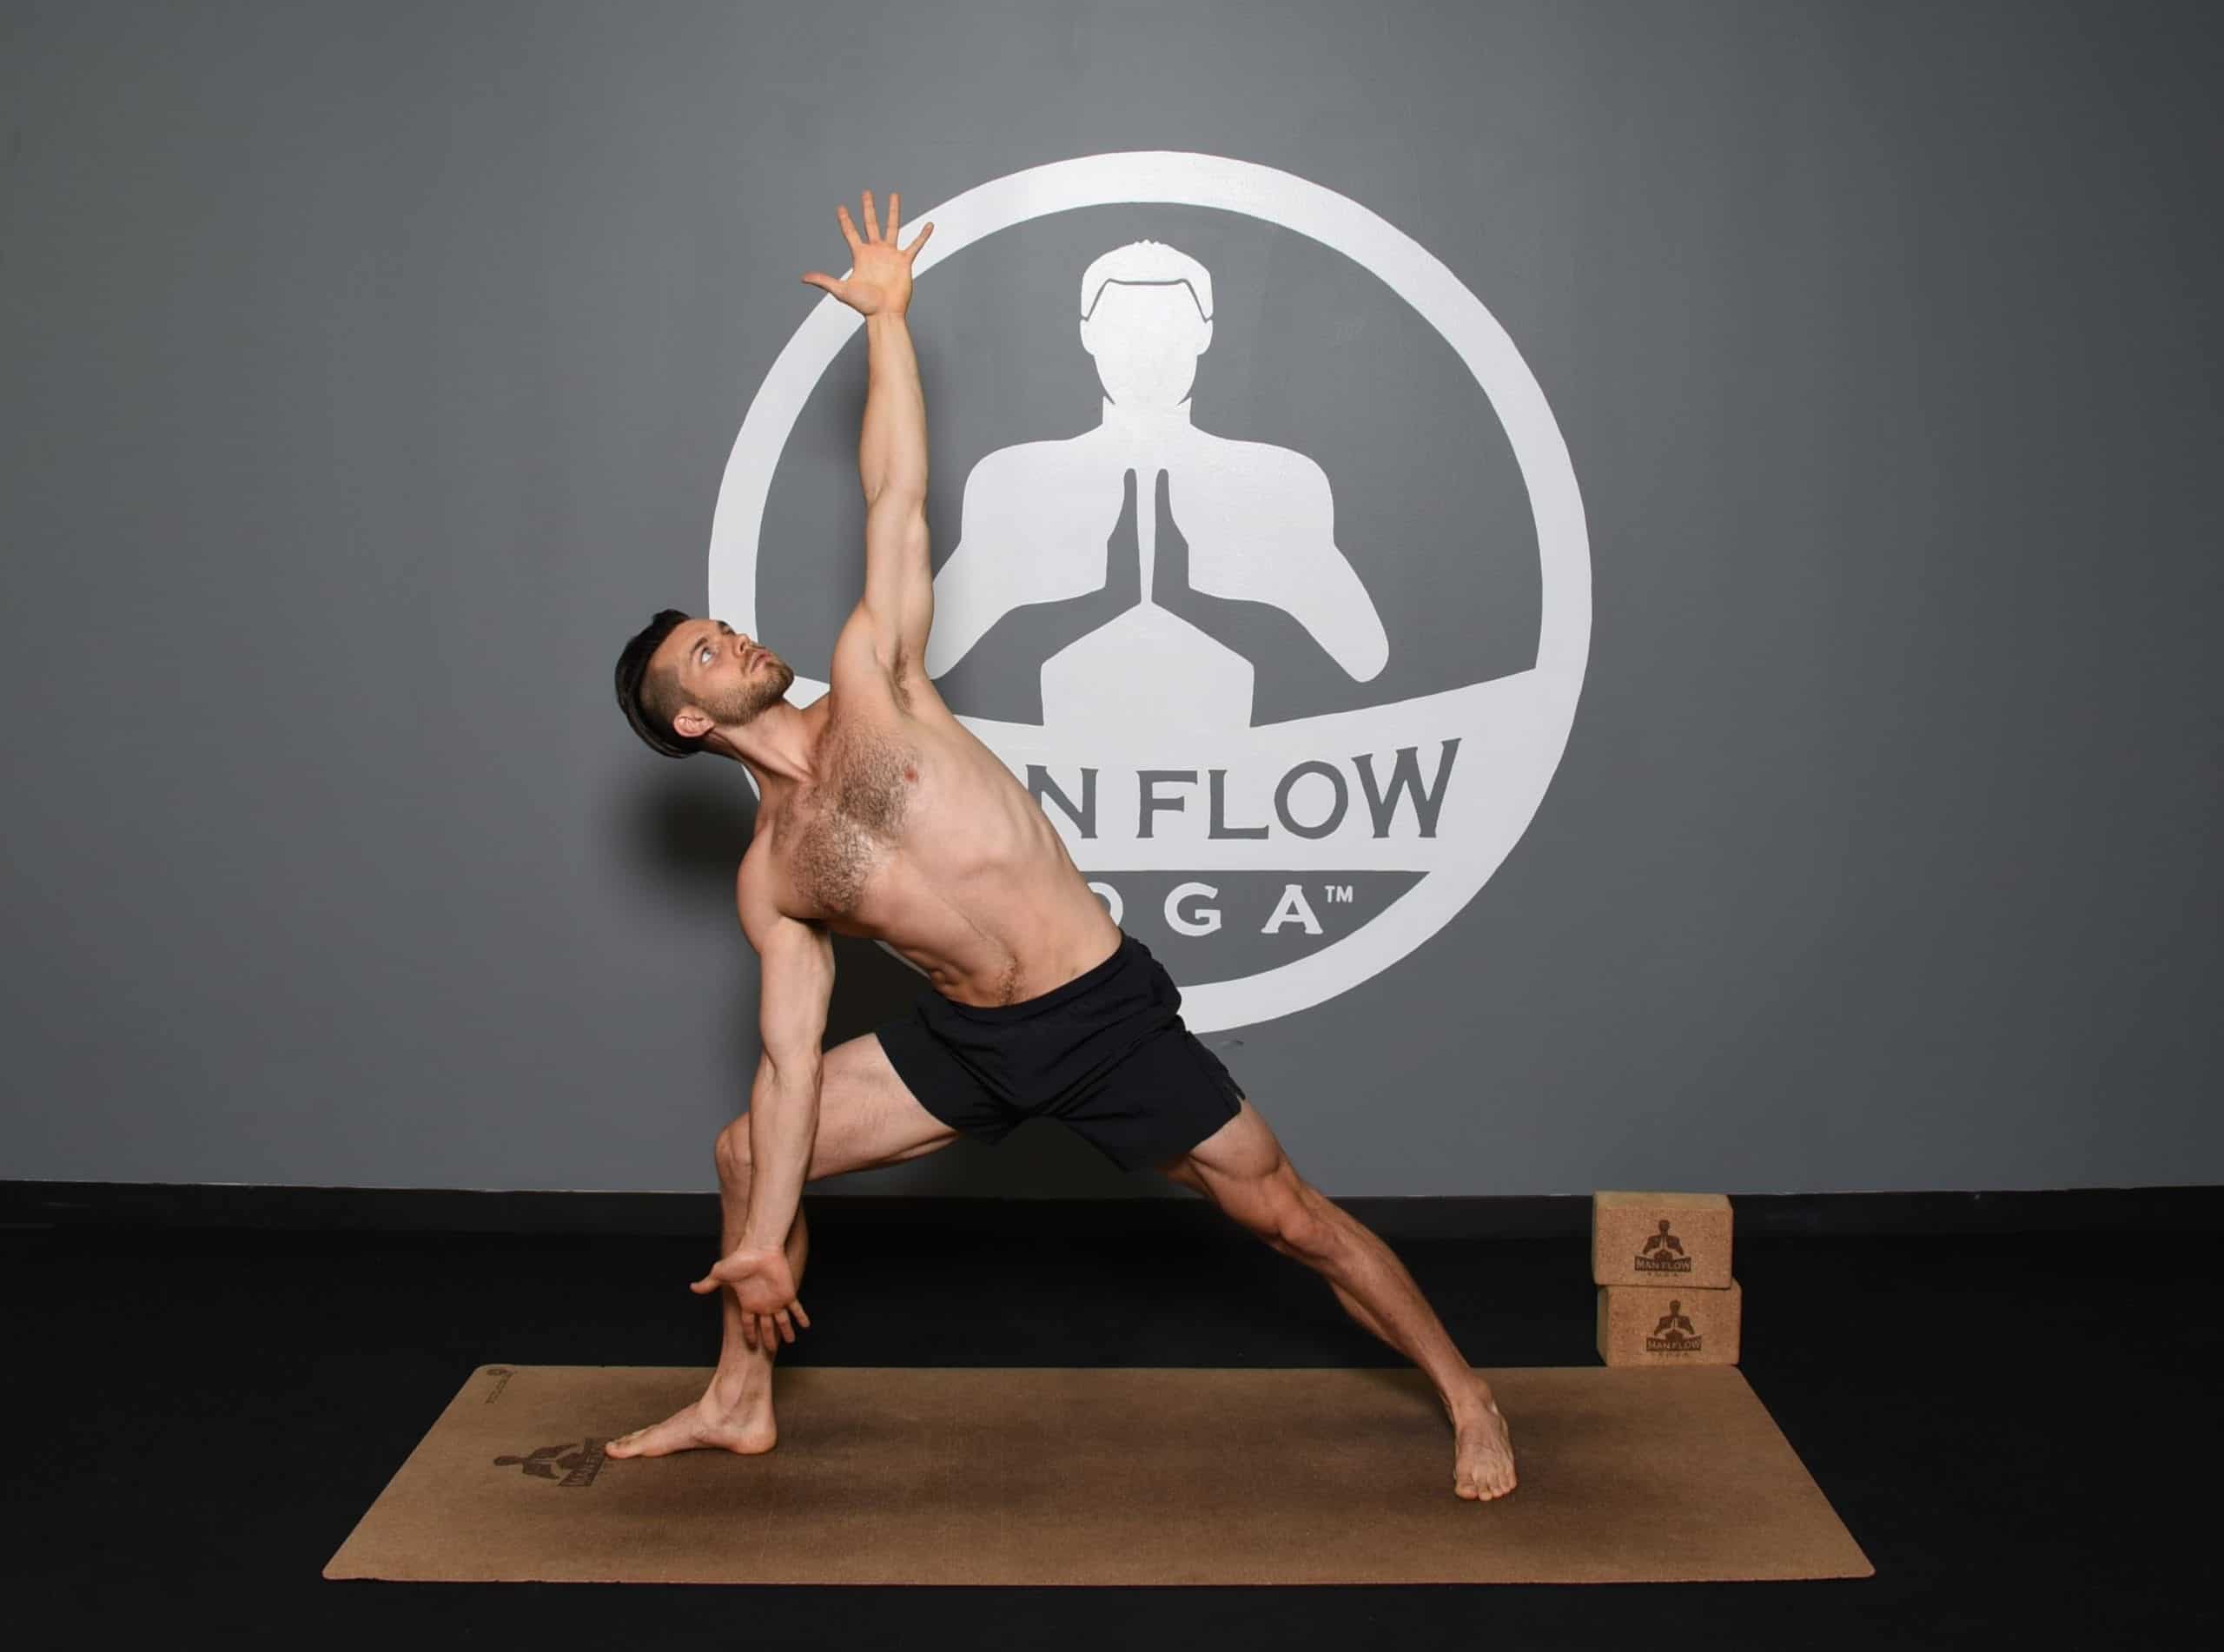 Morning Yoga Poses for Energy - Side Angle